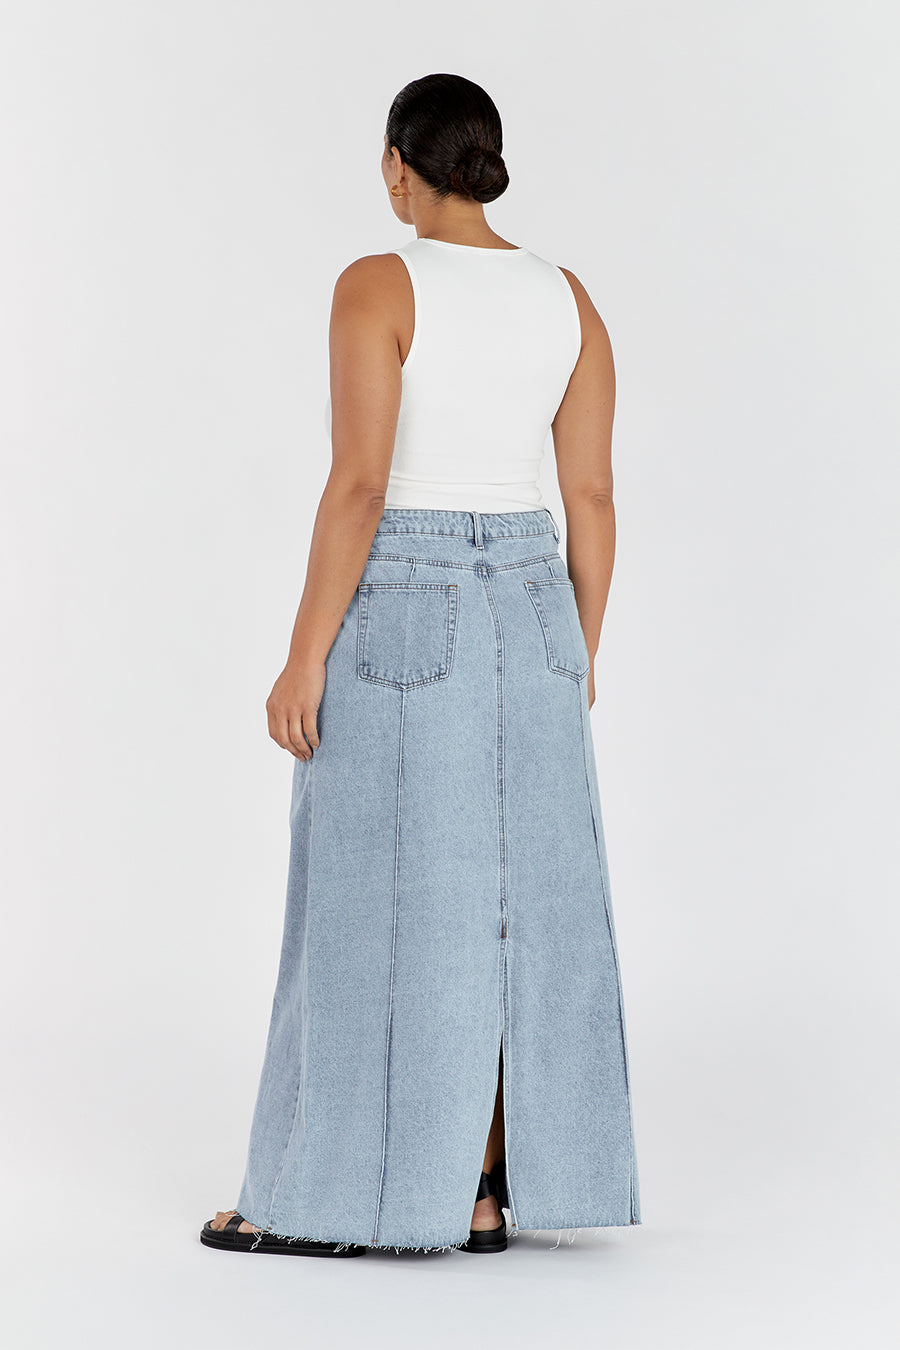 Blue Denim Frill Maxi Skirt | Jaded London